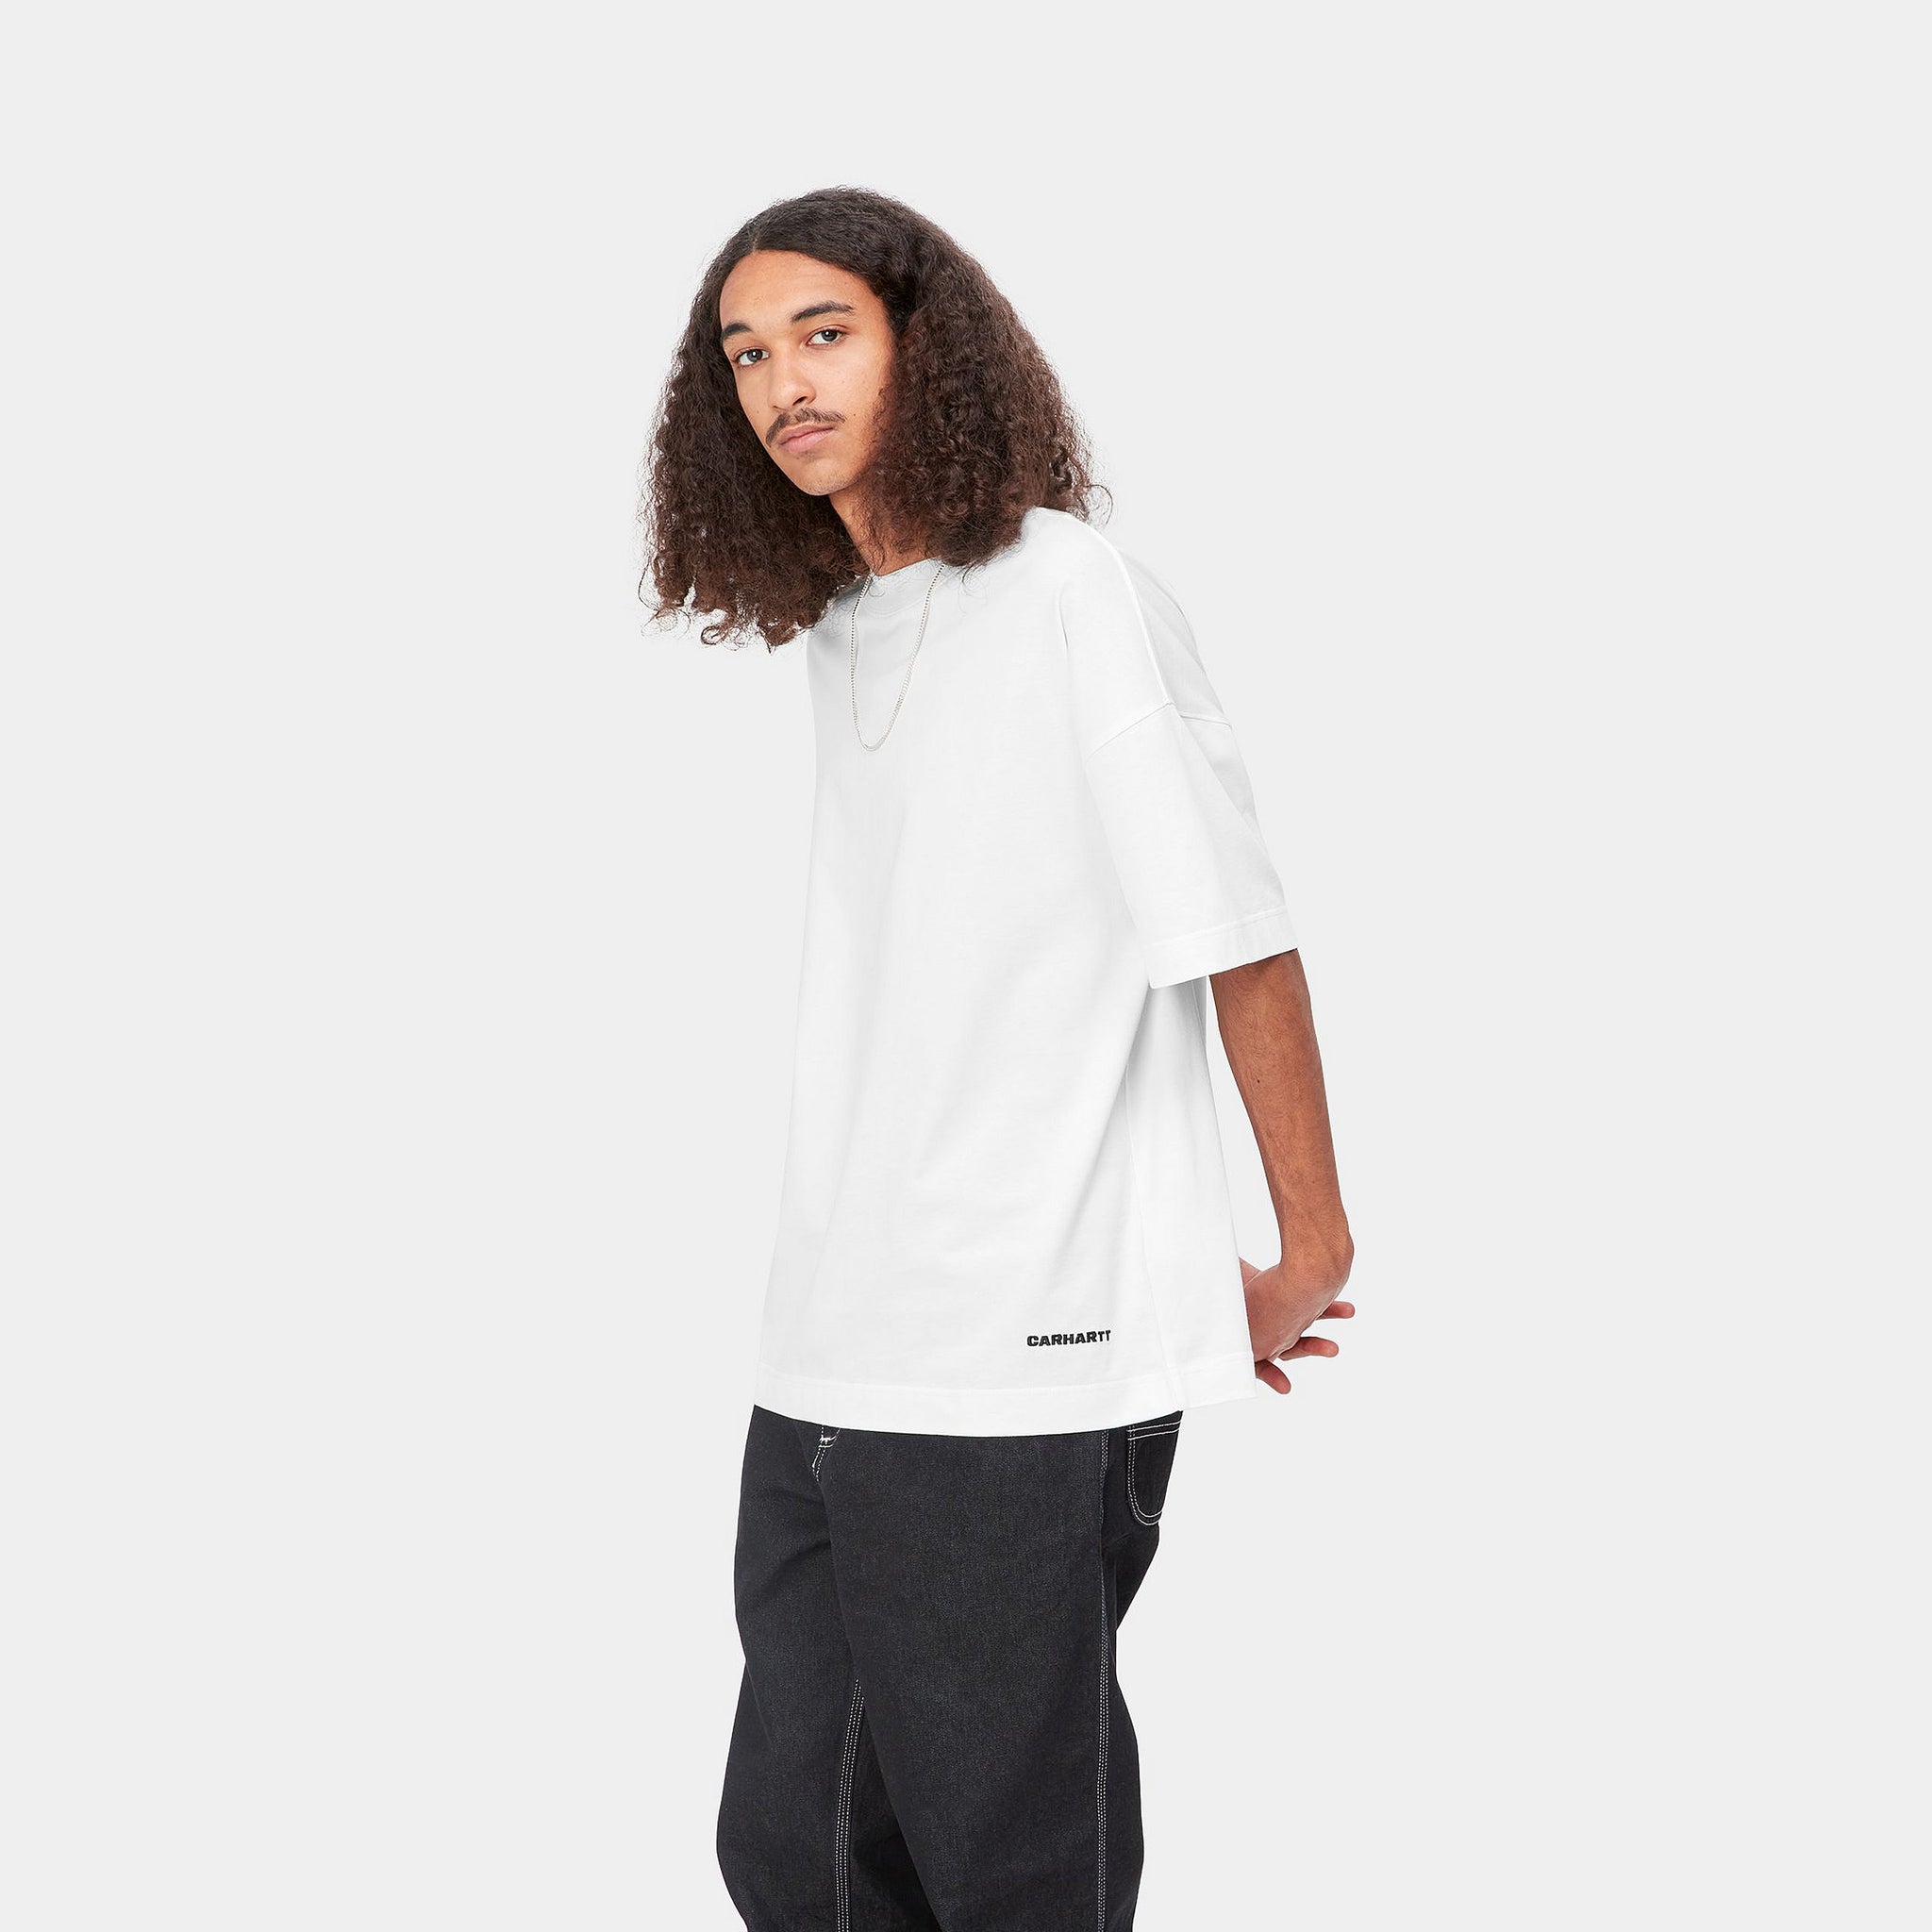 S/s Link Script T-shirt 100% Organic Cotton Single Jersey, 230 G/m² (White / Black)